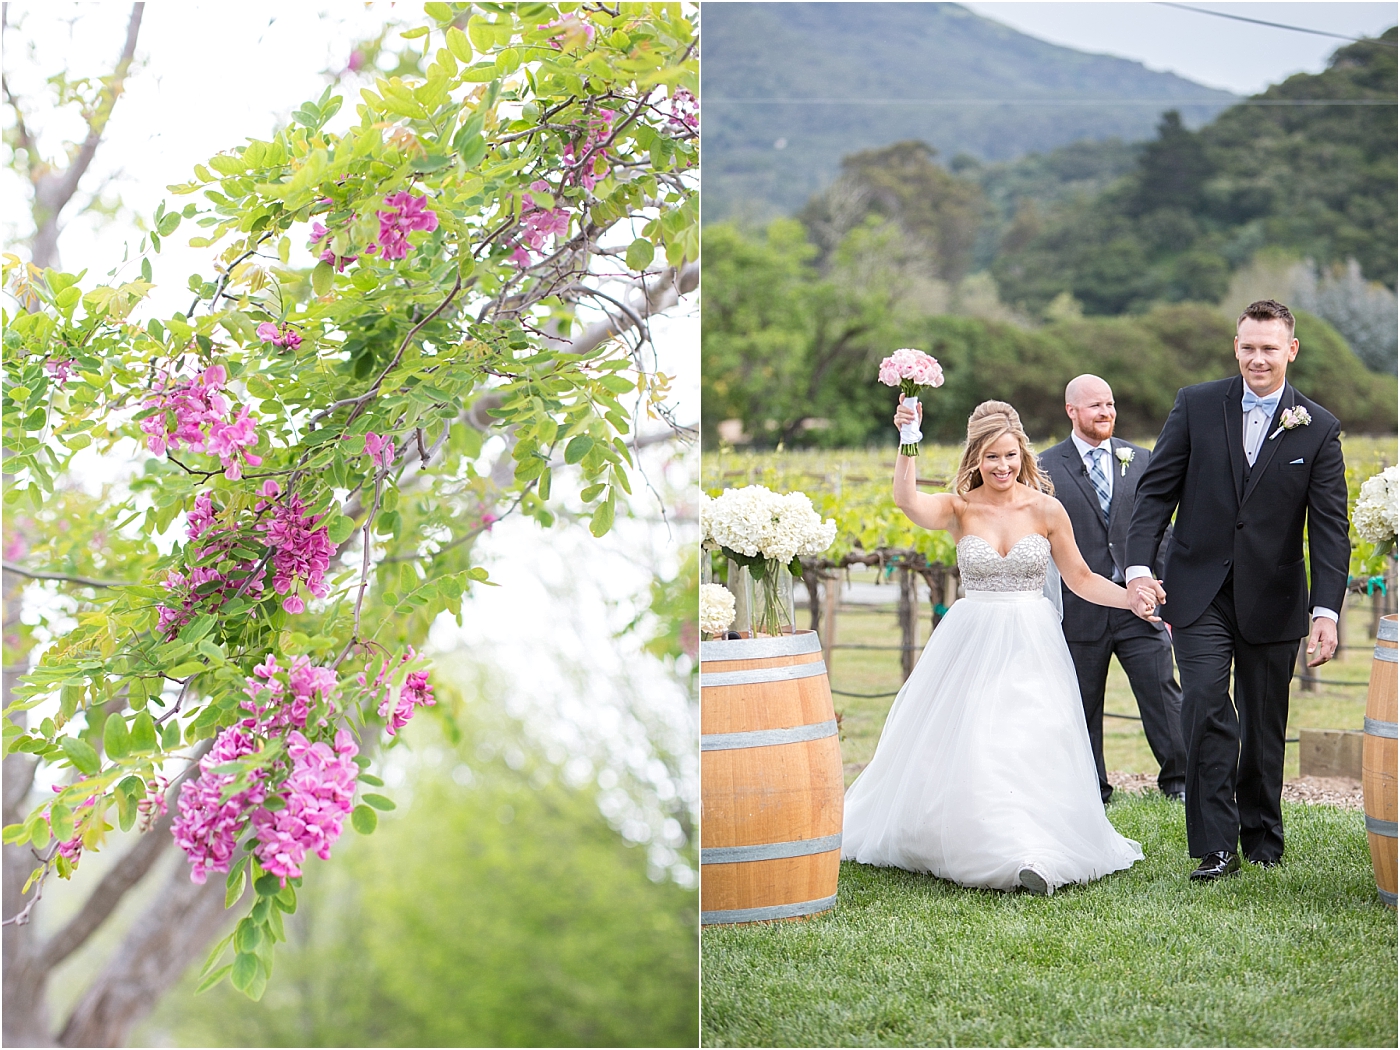 Folktale Winery Wedding | Carmel Valley Wedding | Photos by Laura & Rachel www.lauraandrachel.com